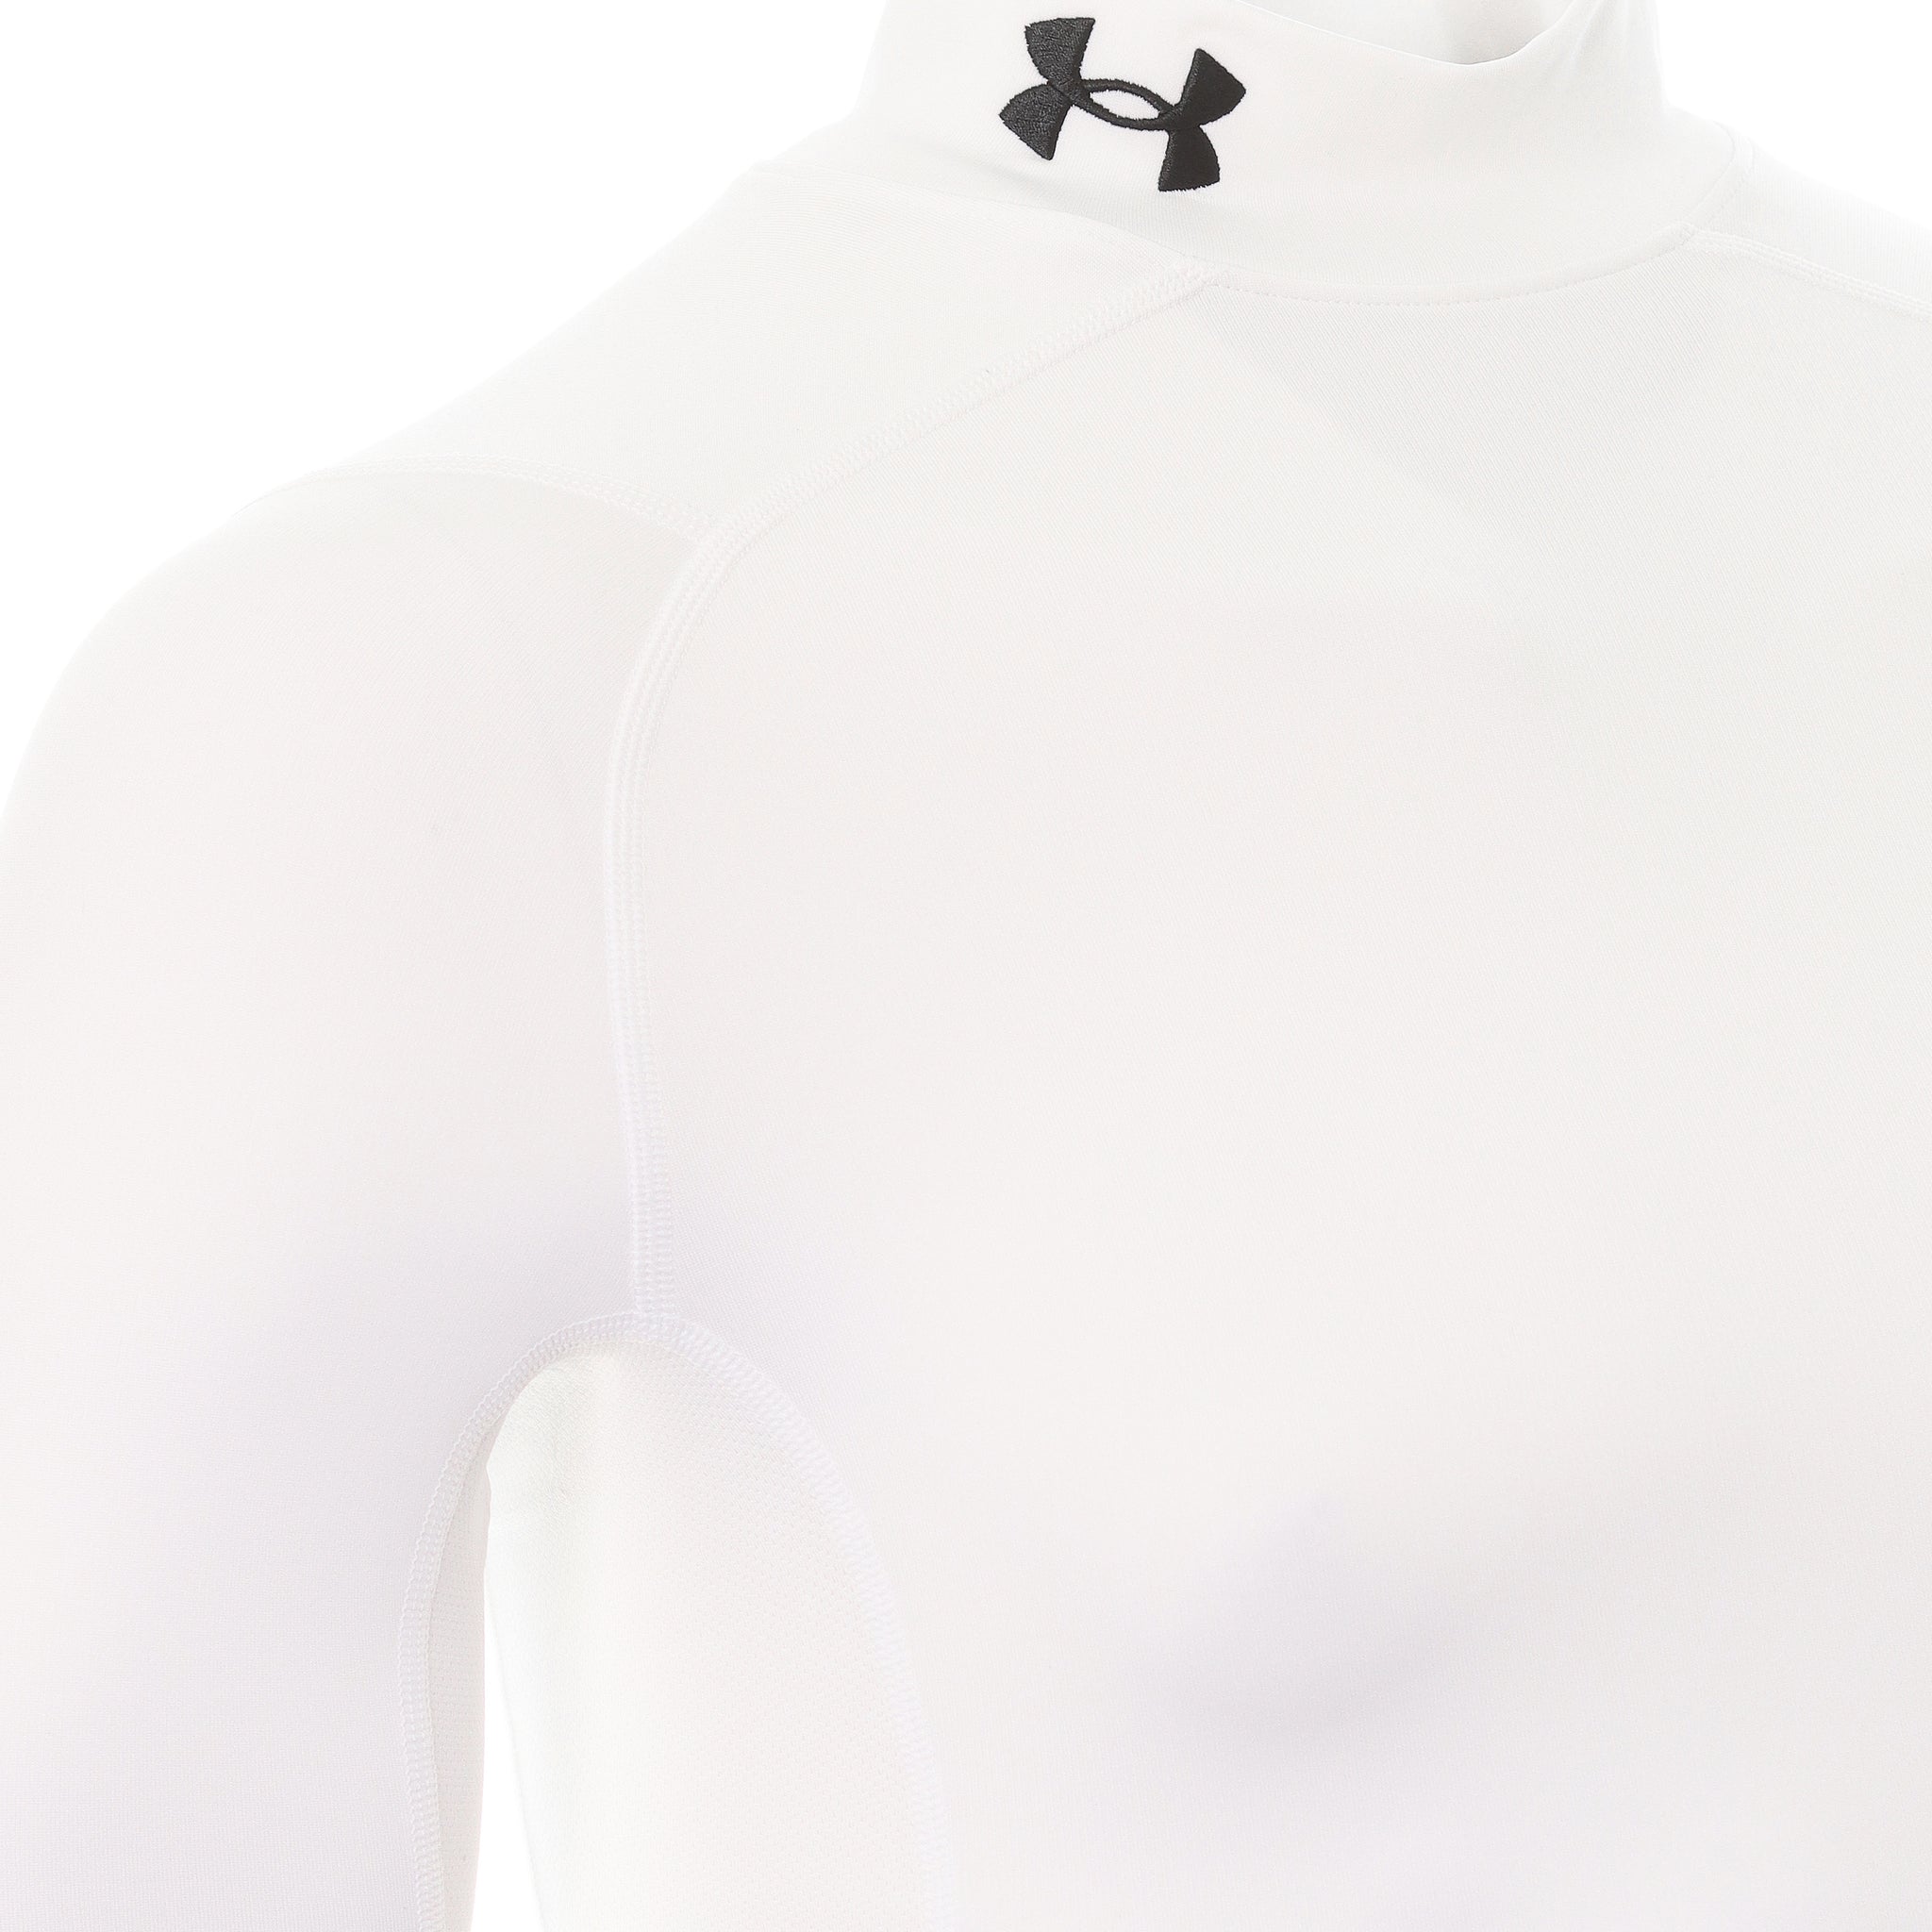 ESPECIAL GOLF Under Armour Golf COLDGEAR COMPRESSION - Camiseta térmica  hombre white - Private Sport Shop